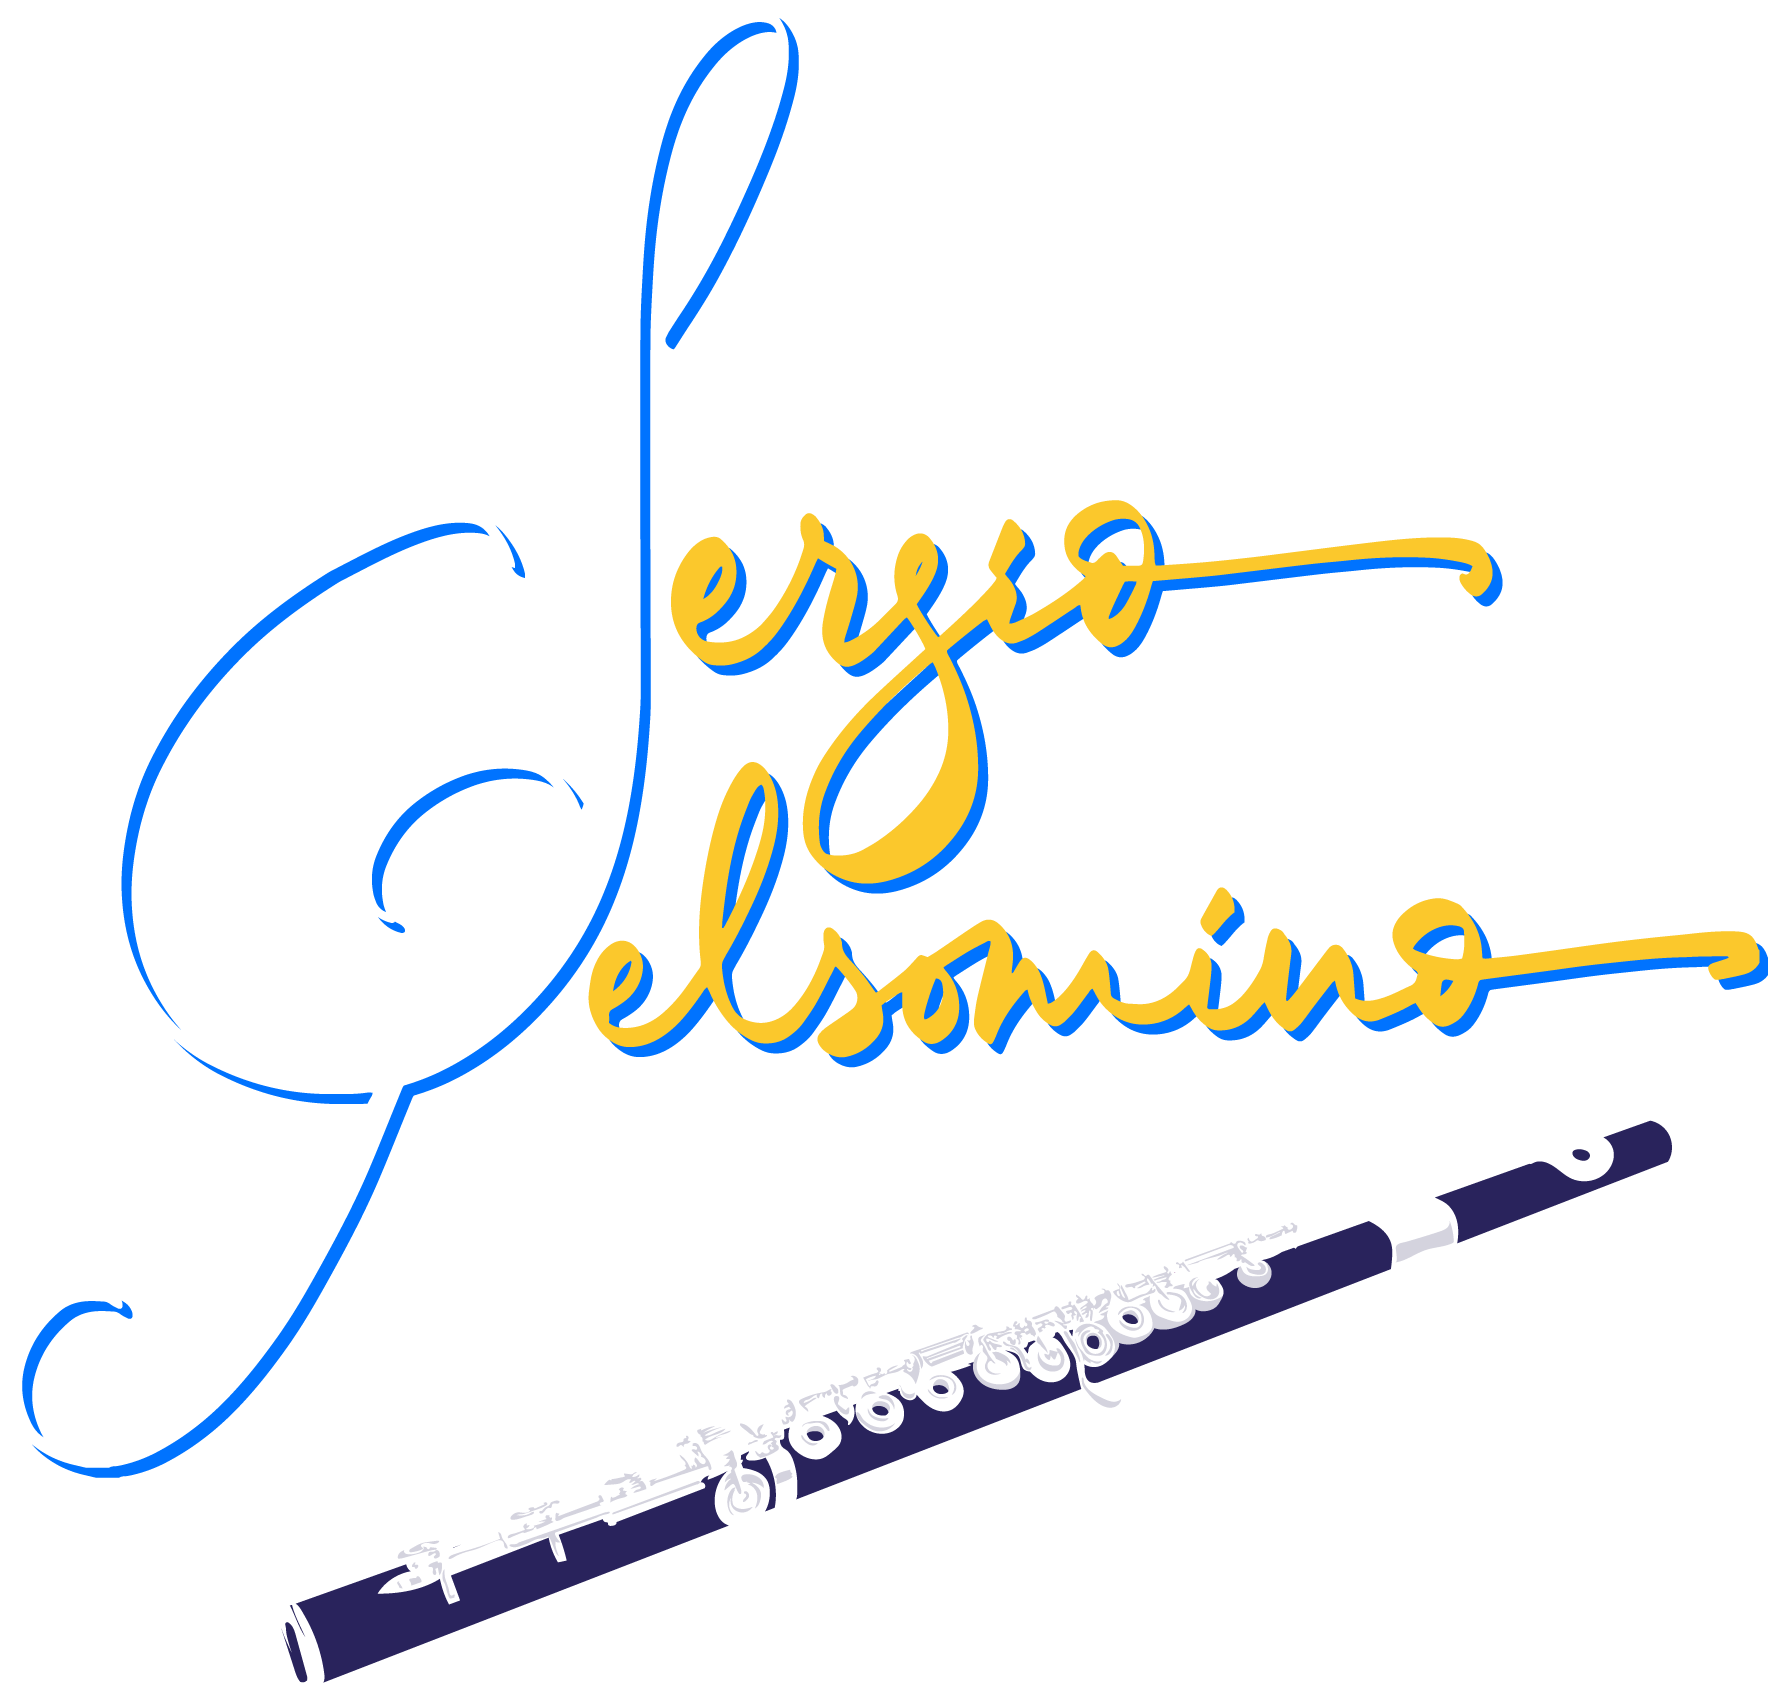 Sergio Gelsomino - Logo